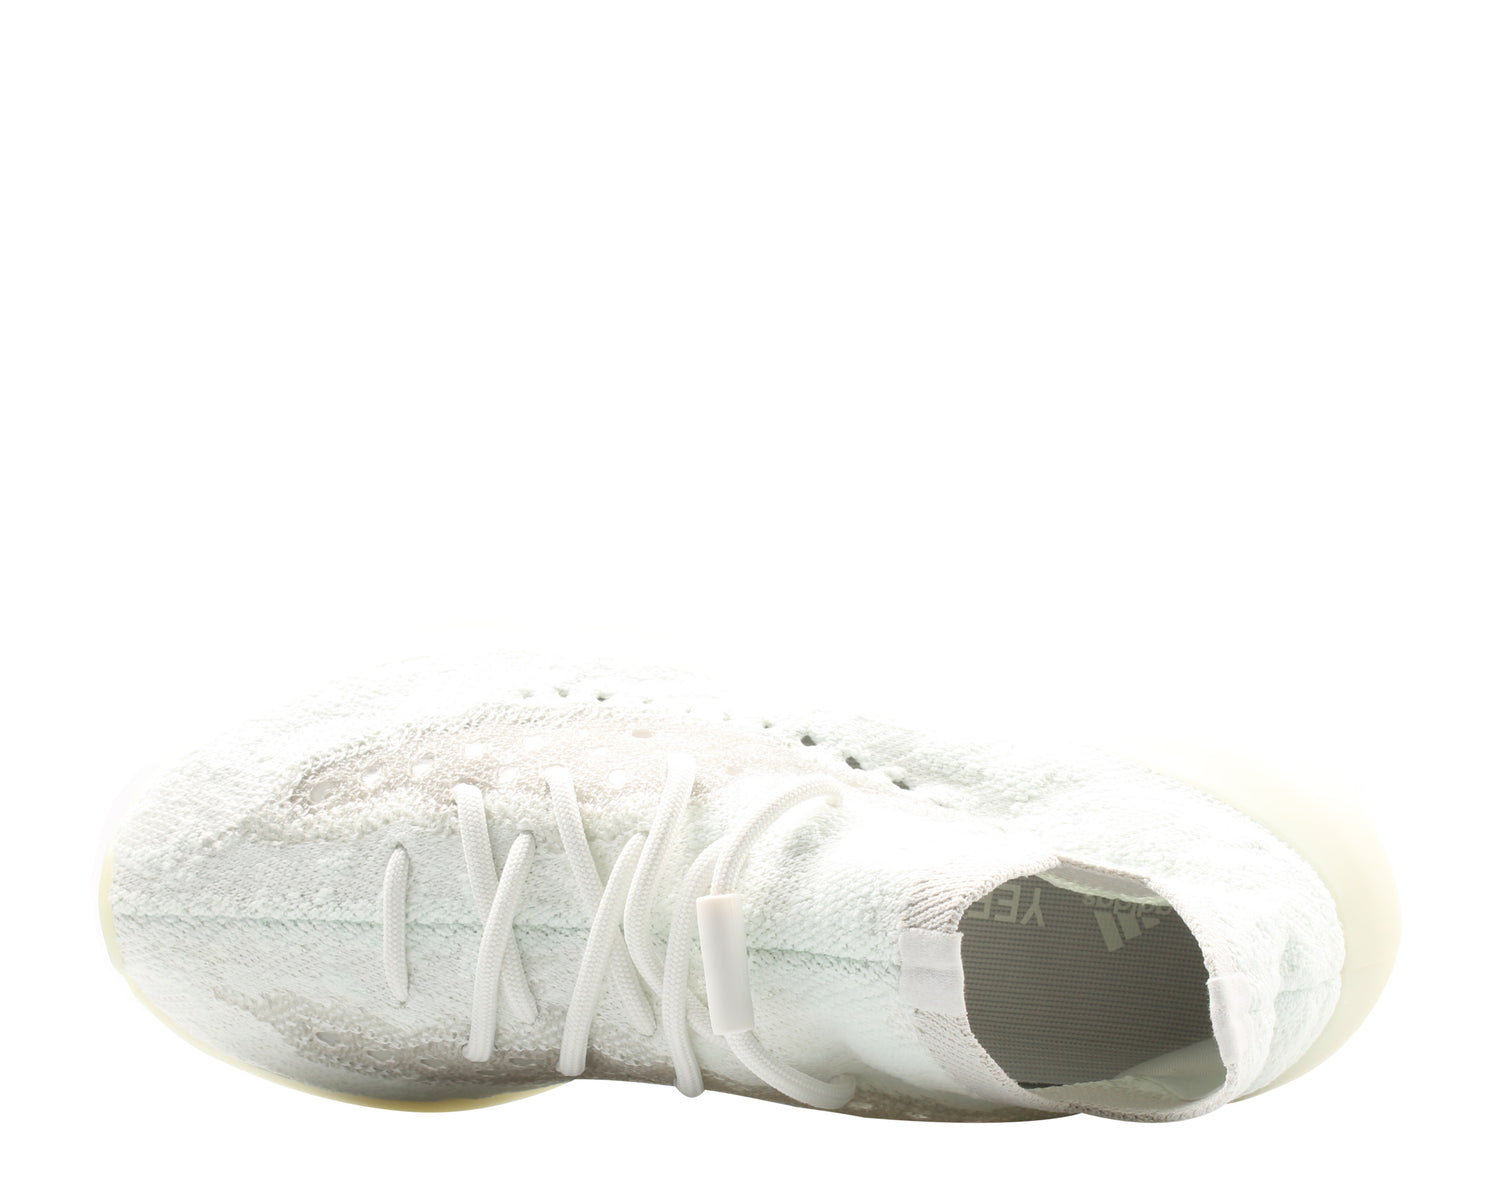 Adidas Yeezy Boost 380 - Calcite Glow